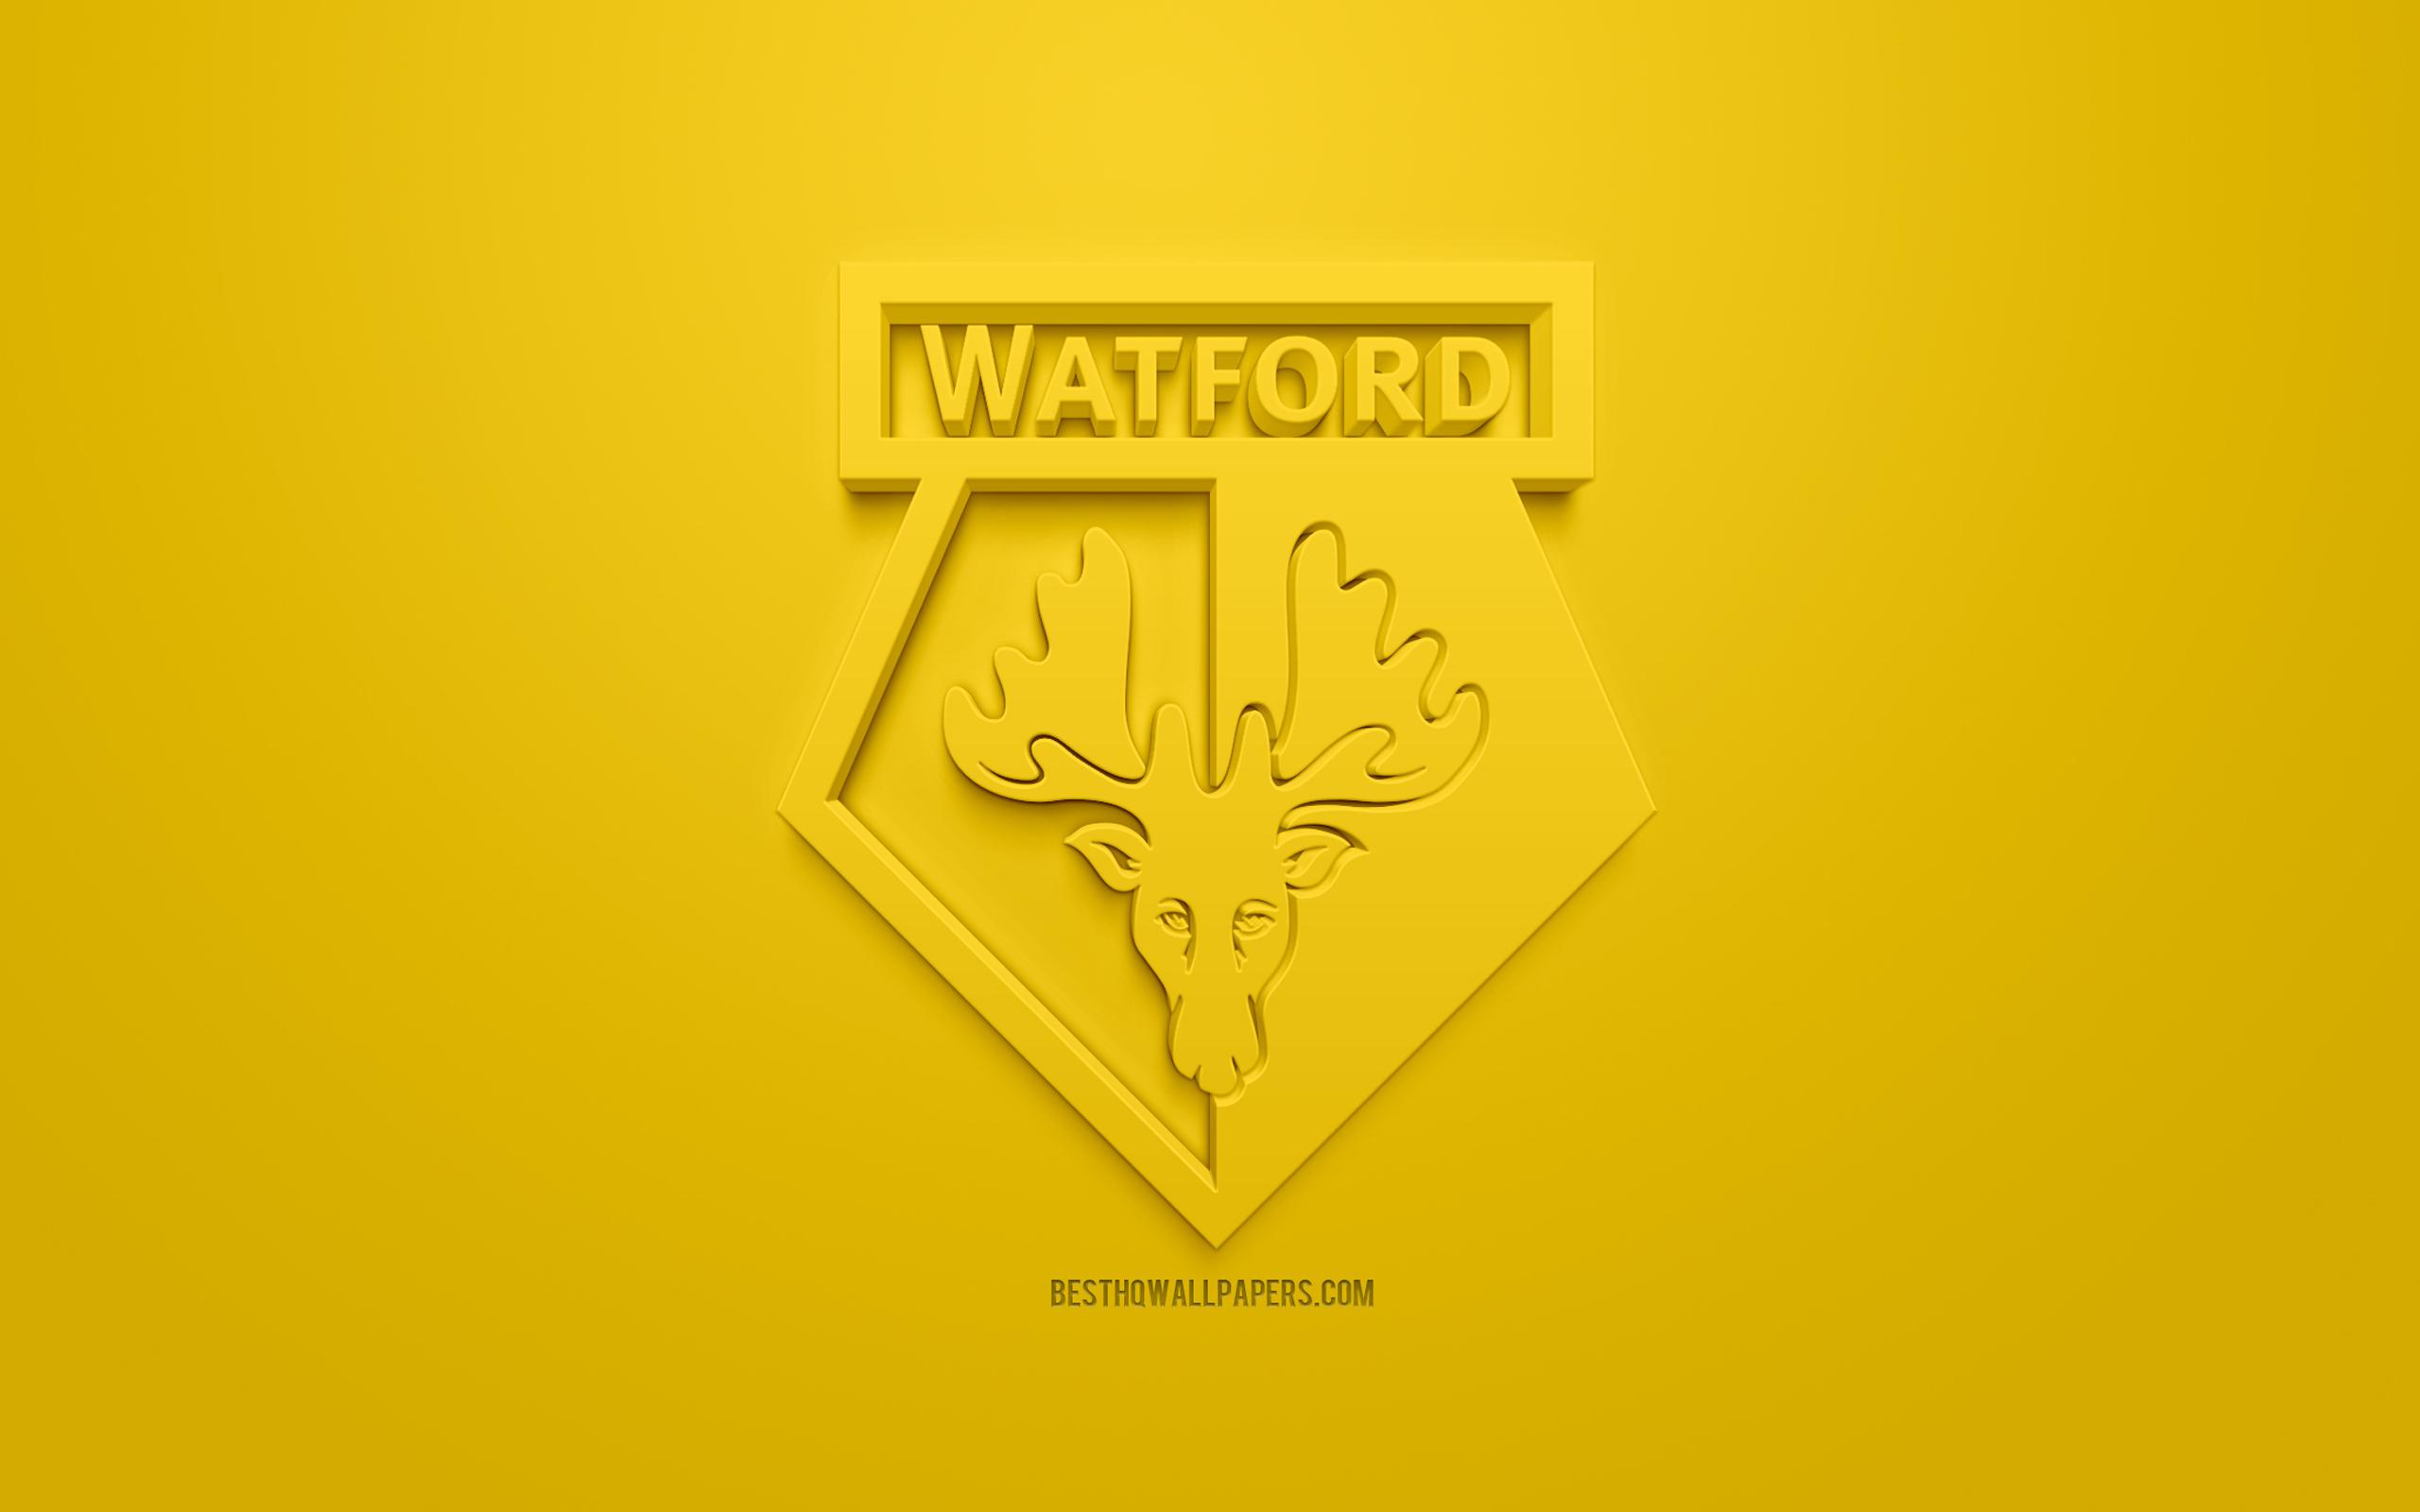 Download wallpaper Watford FC, creative 3D logo, yellow